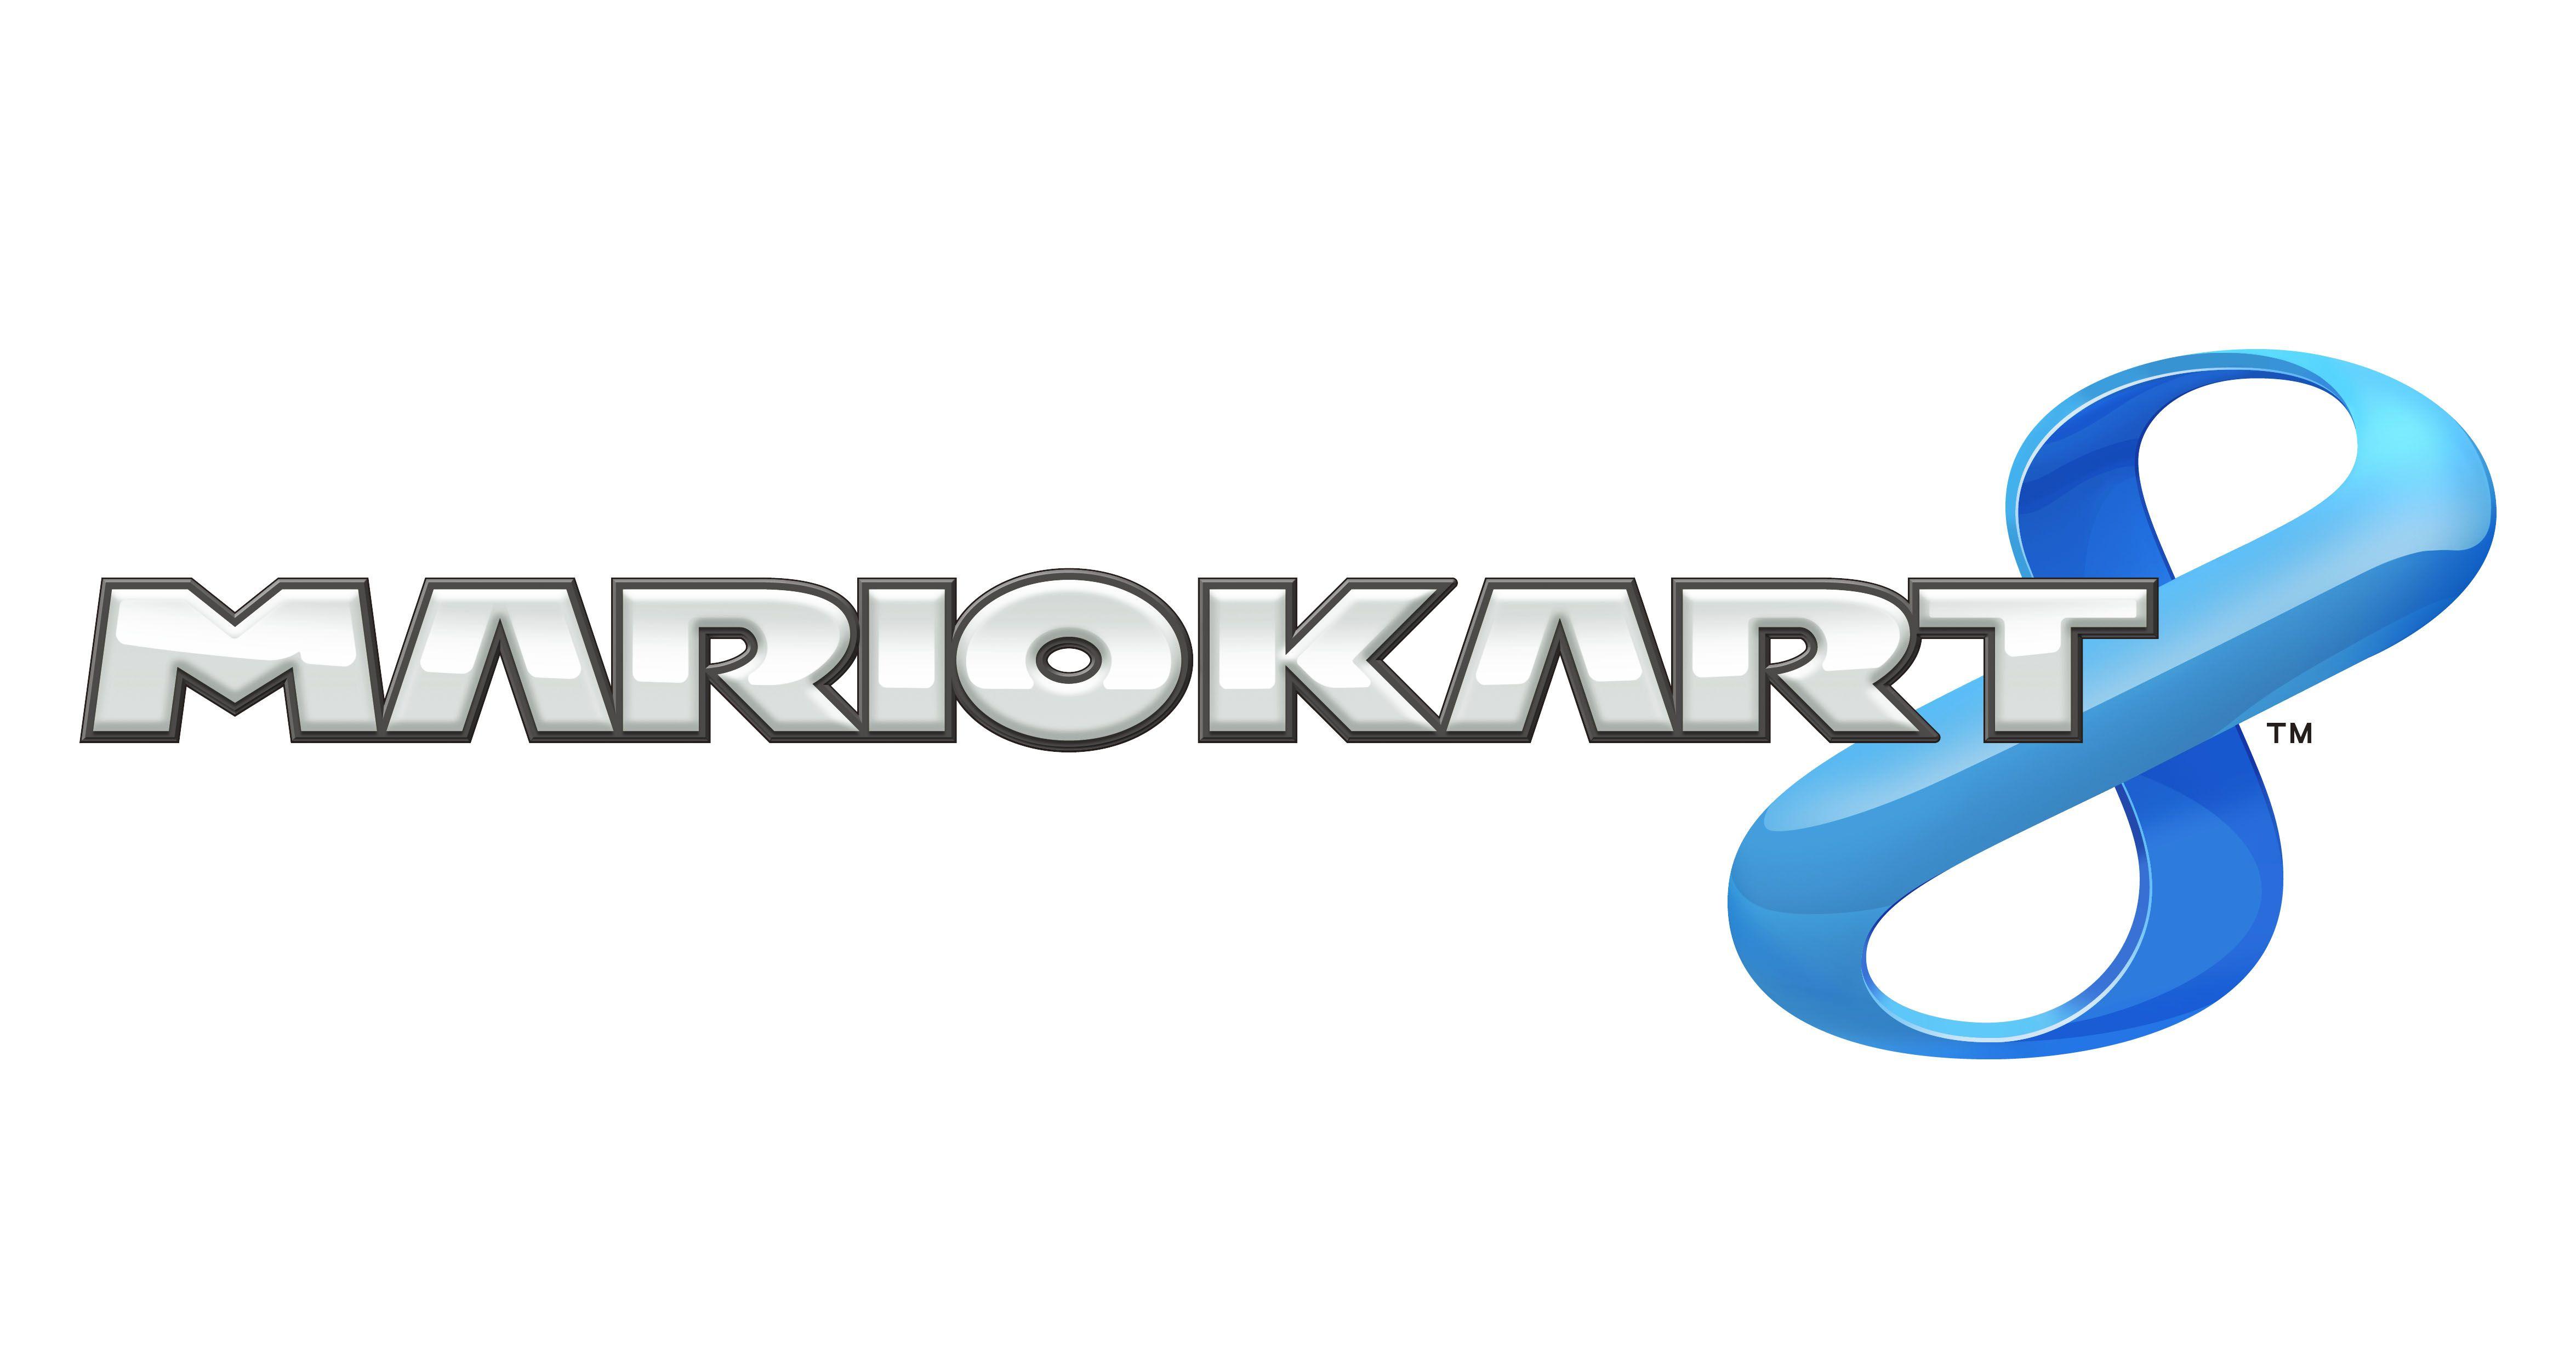 Link U Logo - Mario Kart 8 limited edition nintendo wii u logo